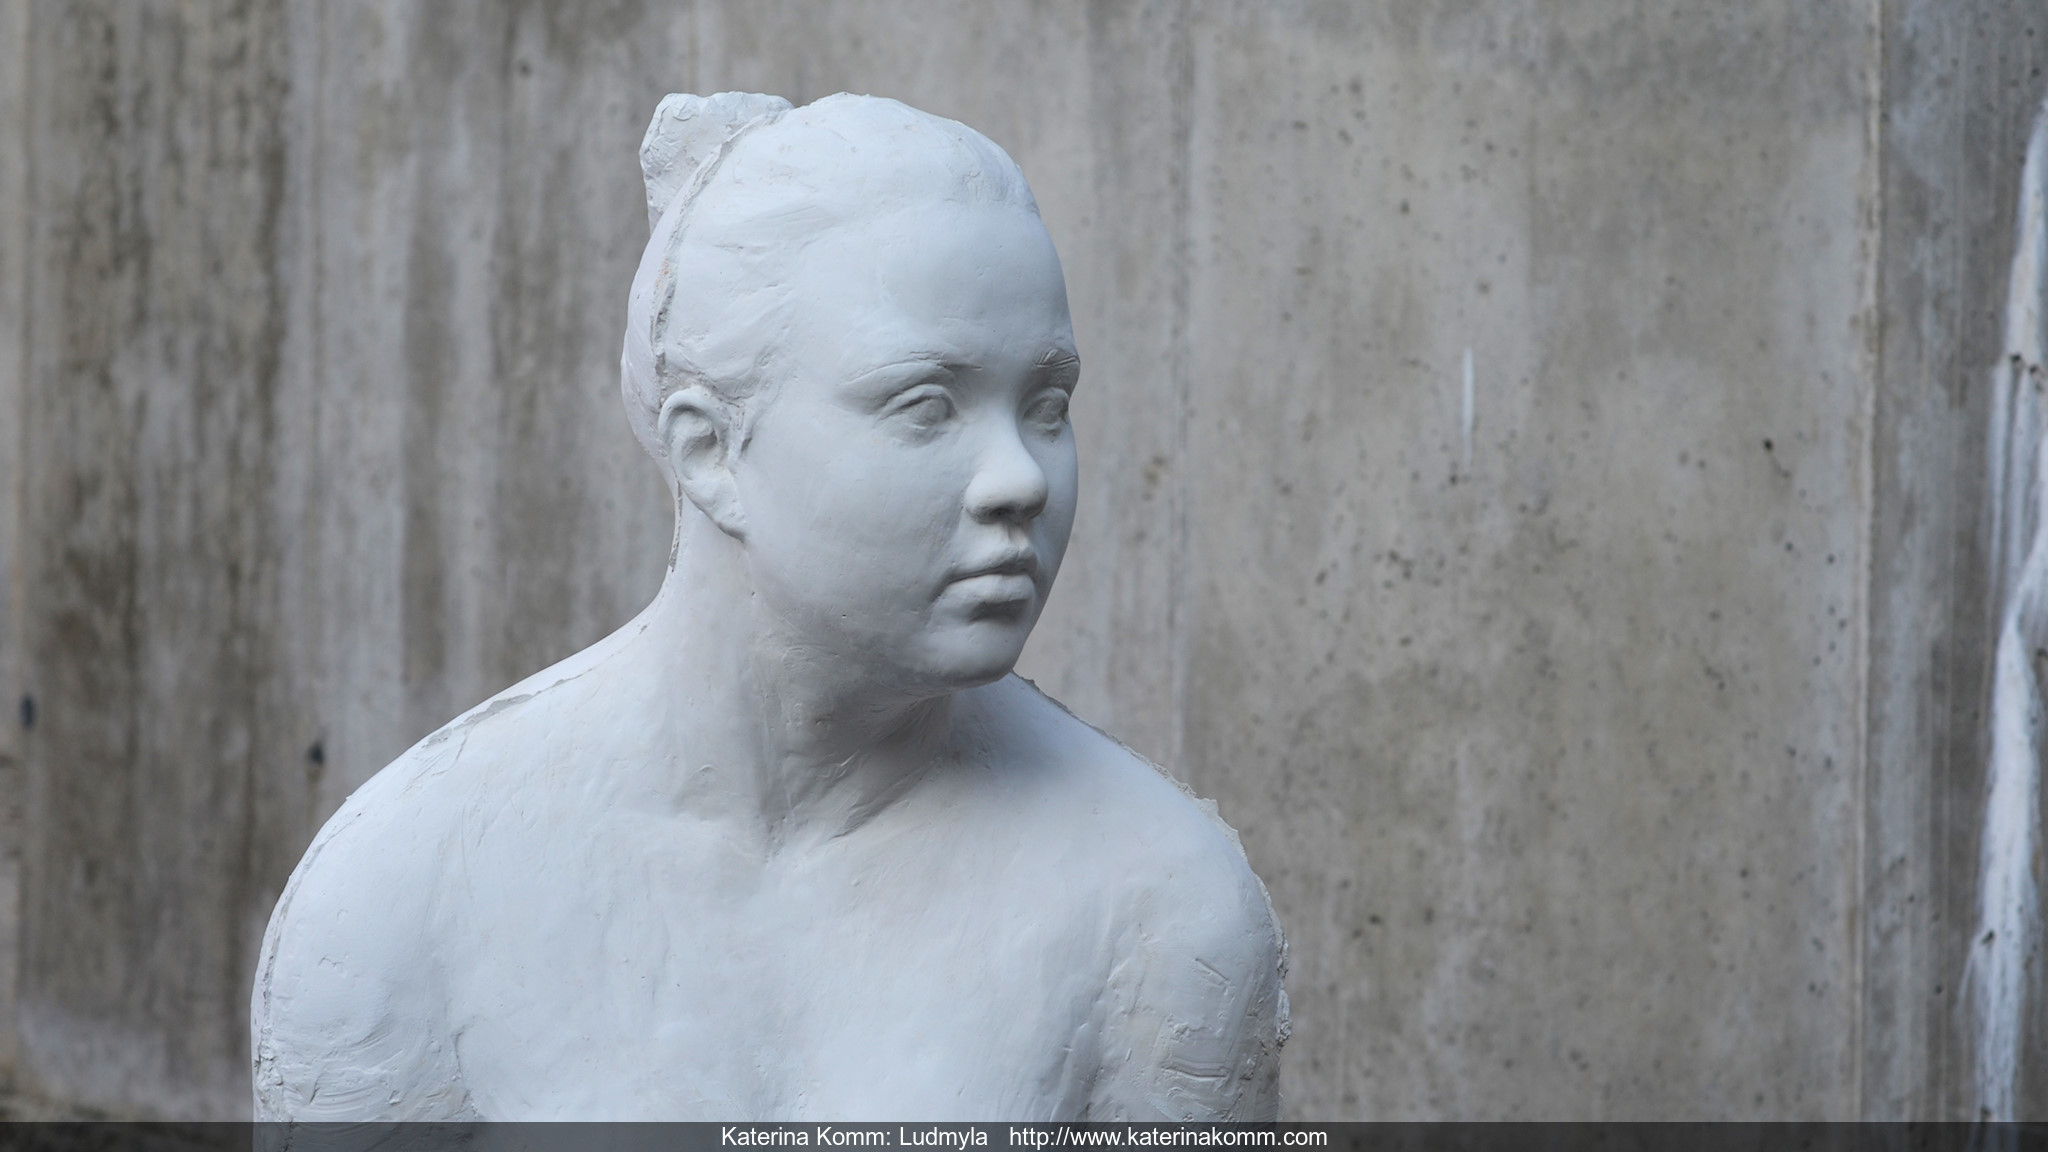 Katerina Komm, sculpture, STUDIE: Ludmyla